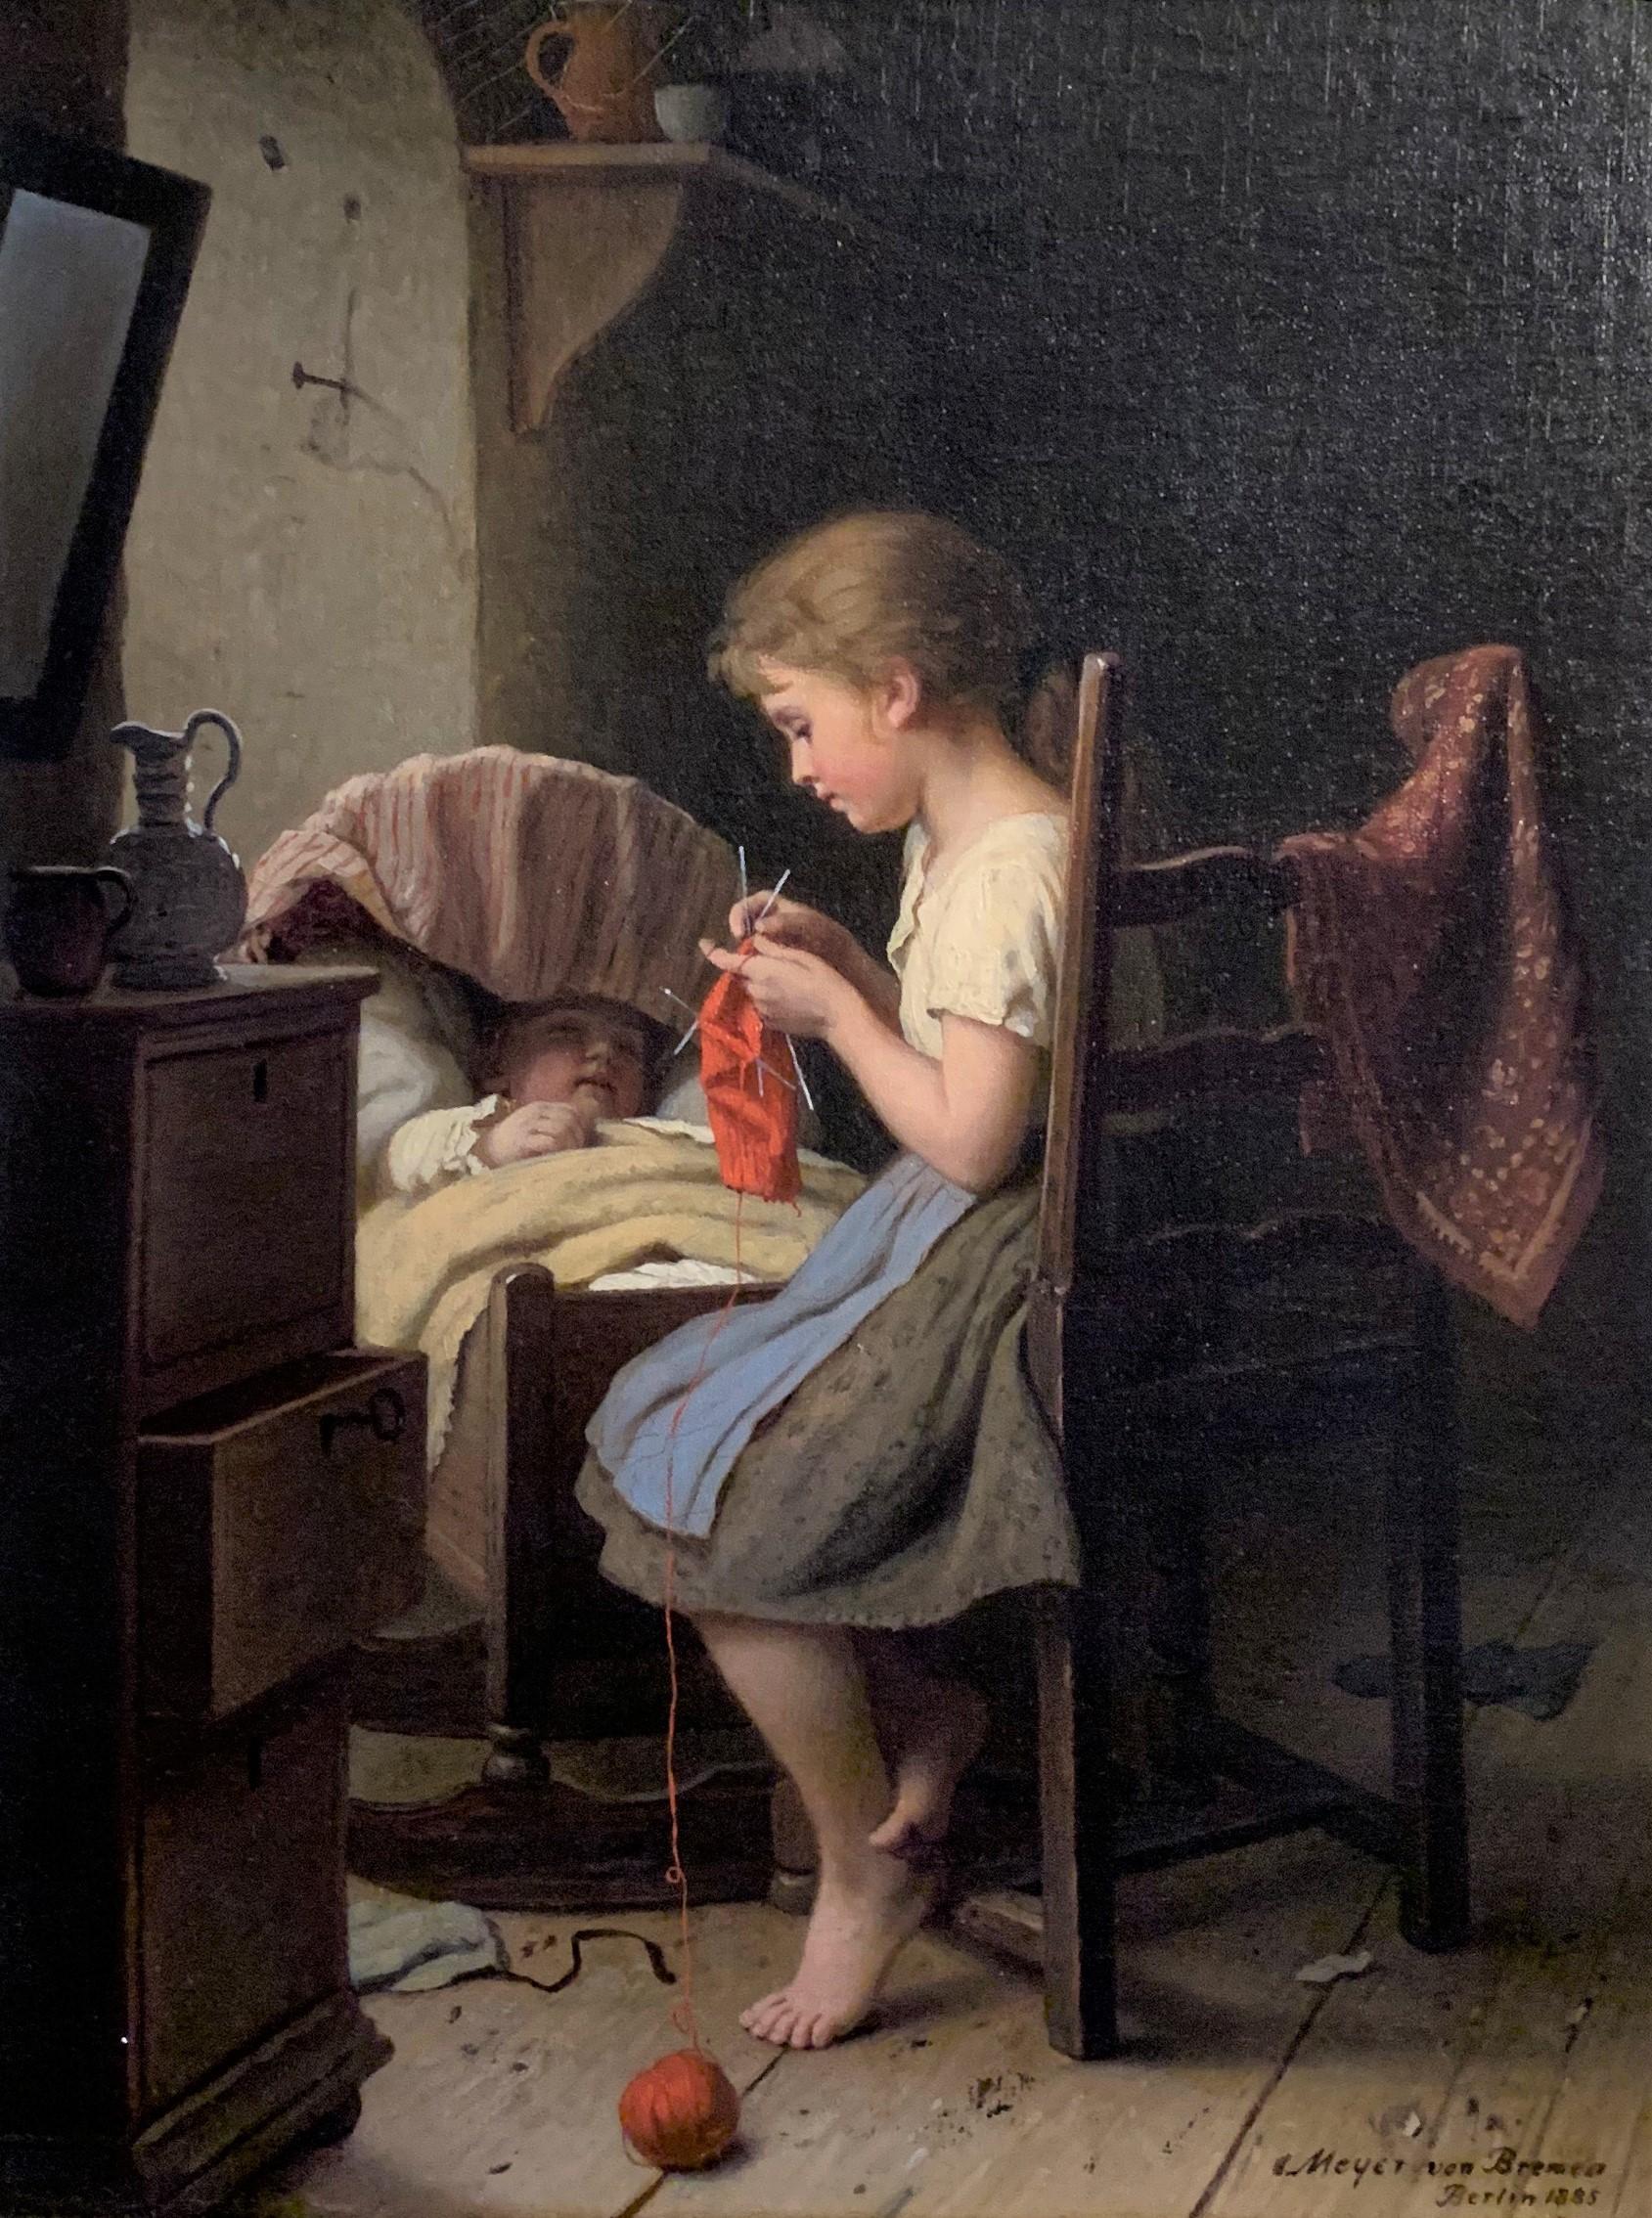 Sister Knitting with Child, German Academic Realism - Painting by Johann Georg Meyer von Bremen